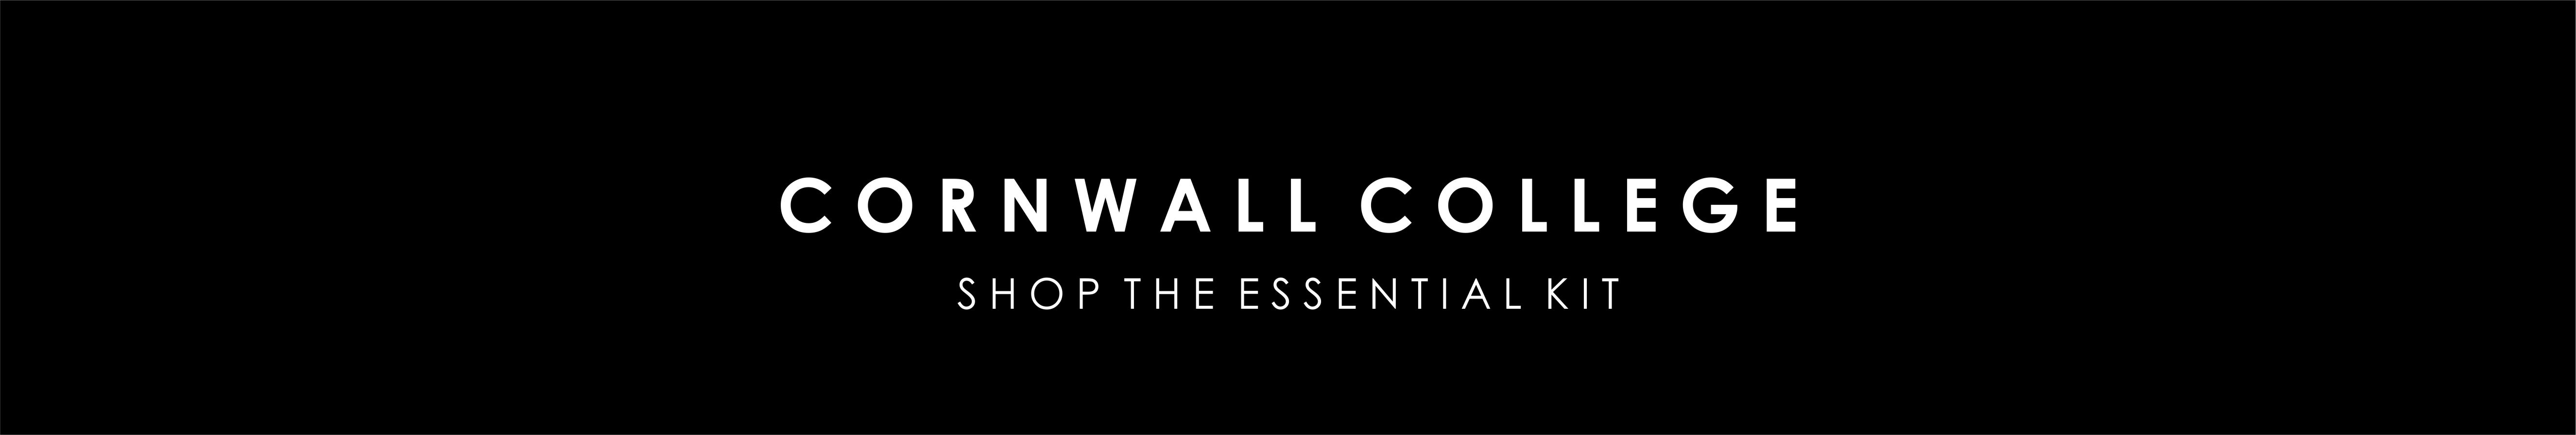 cornwall-college-banner.jpg